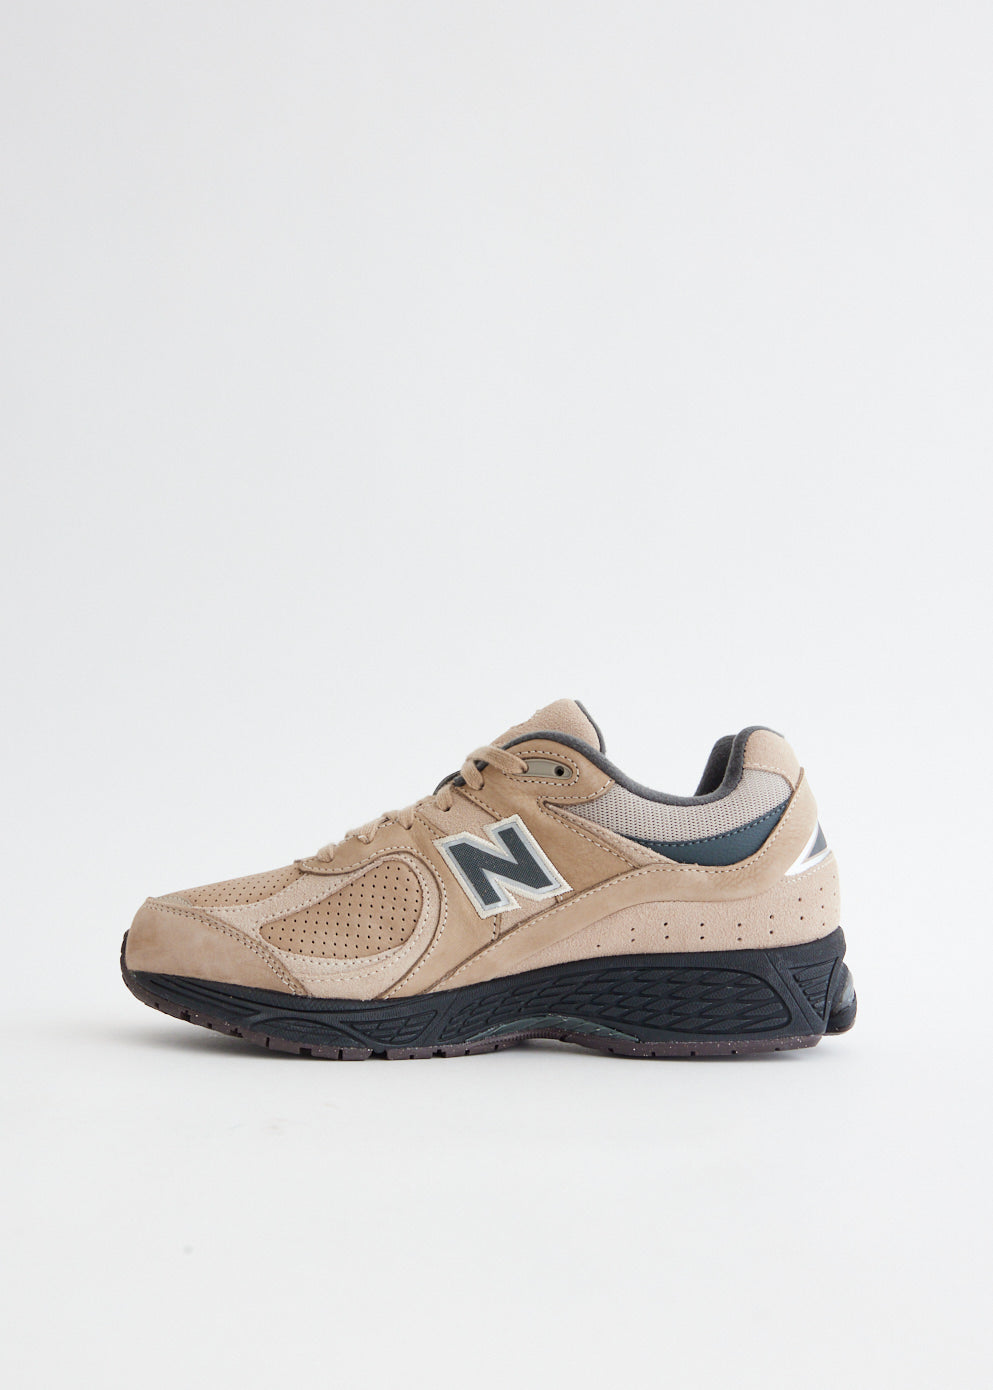 NB 2002R NUBUCK DRIFTWO NEWBALANCE - 靴